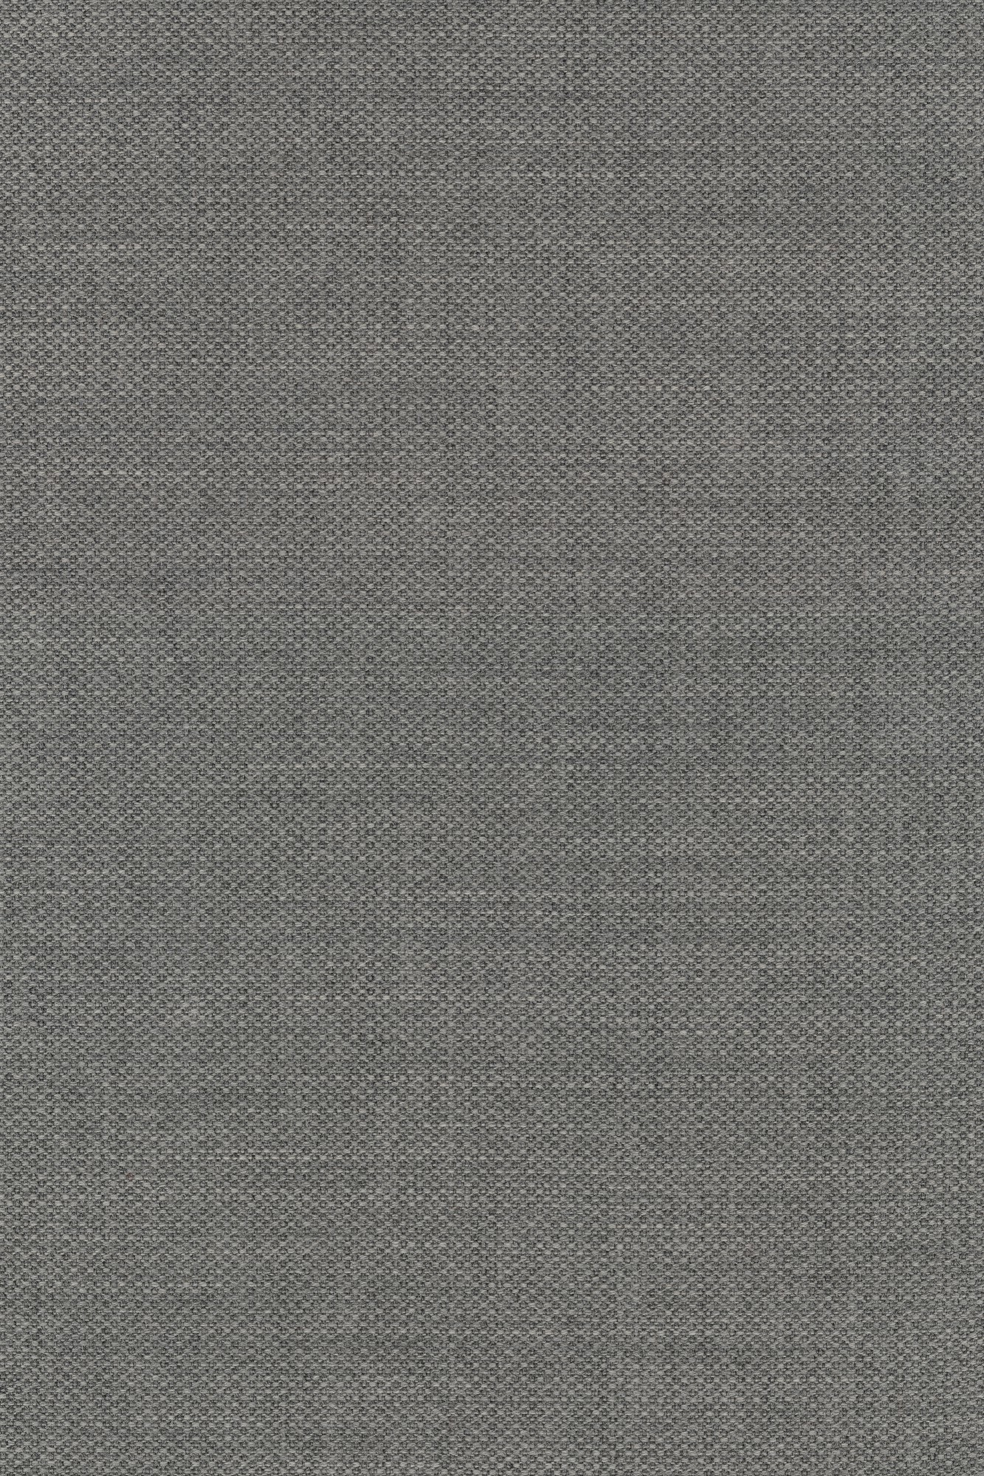 Fabric sample Fiord 151 grey